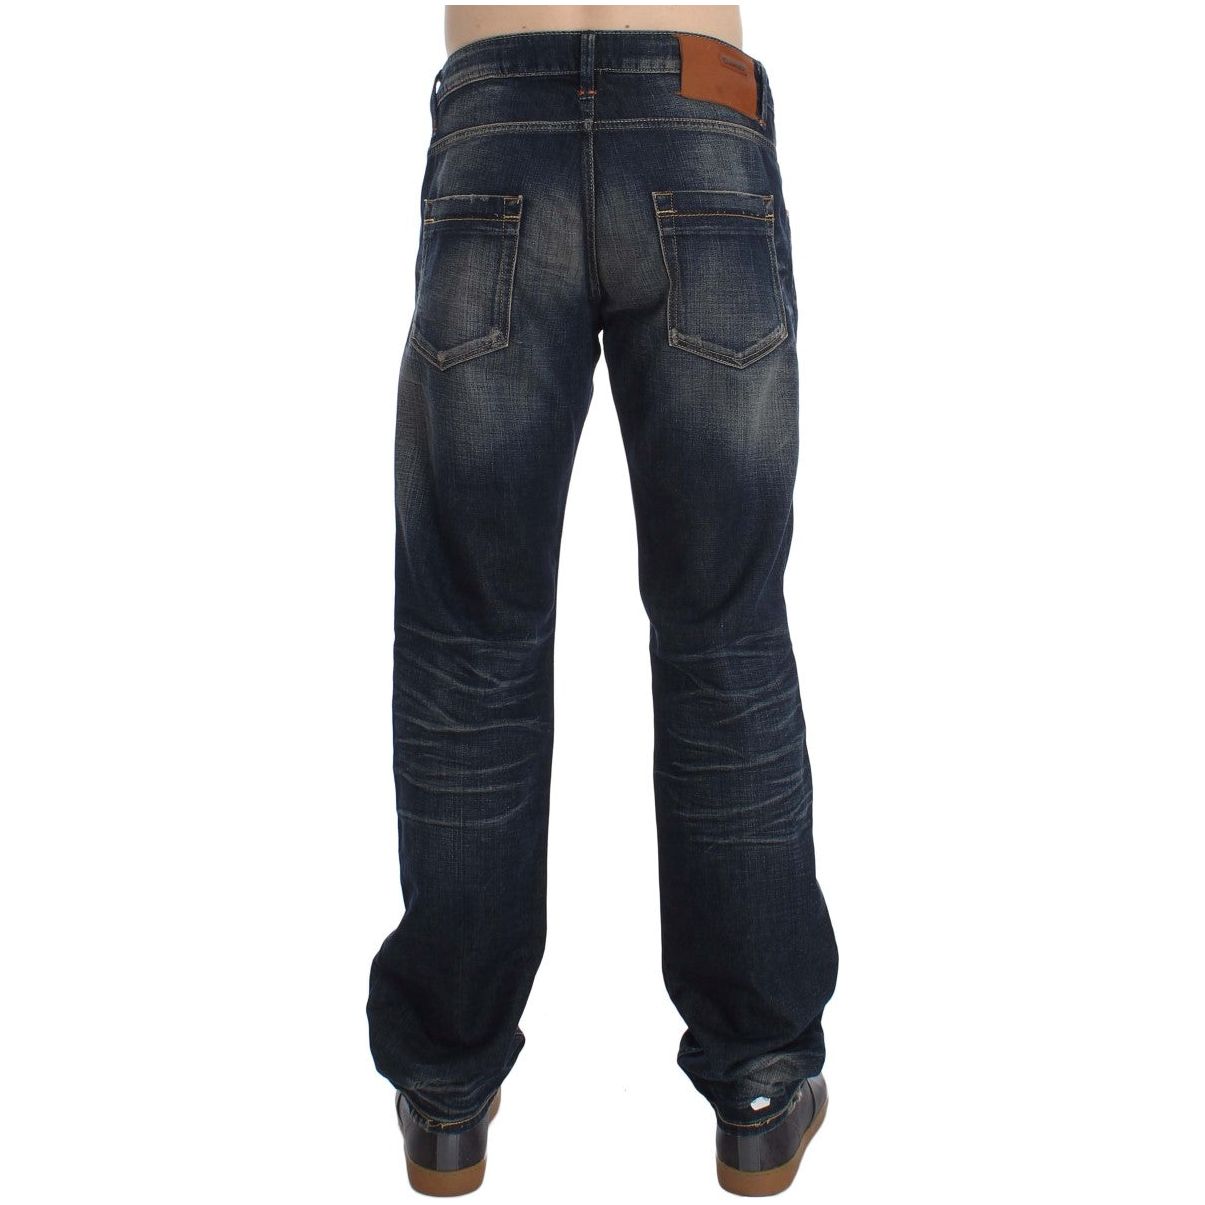 Acht Elegant Straight Fit Low Waist Men's Jeans blue-wash-straight-fit-low-waist-jeans 299234-blue-wash-straight-fit-low-waist-jeans-3.jpg